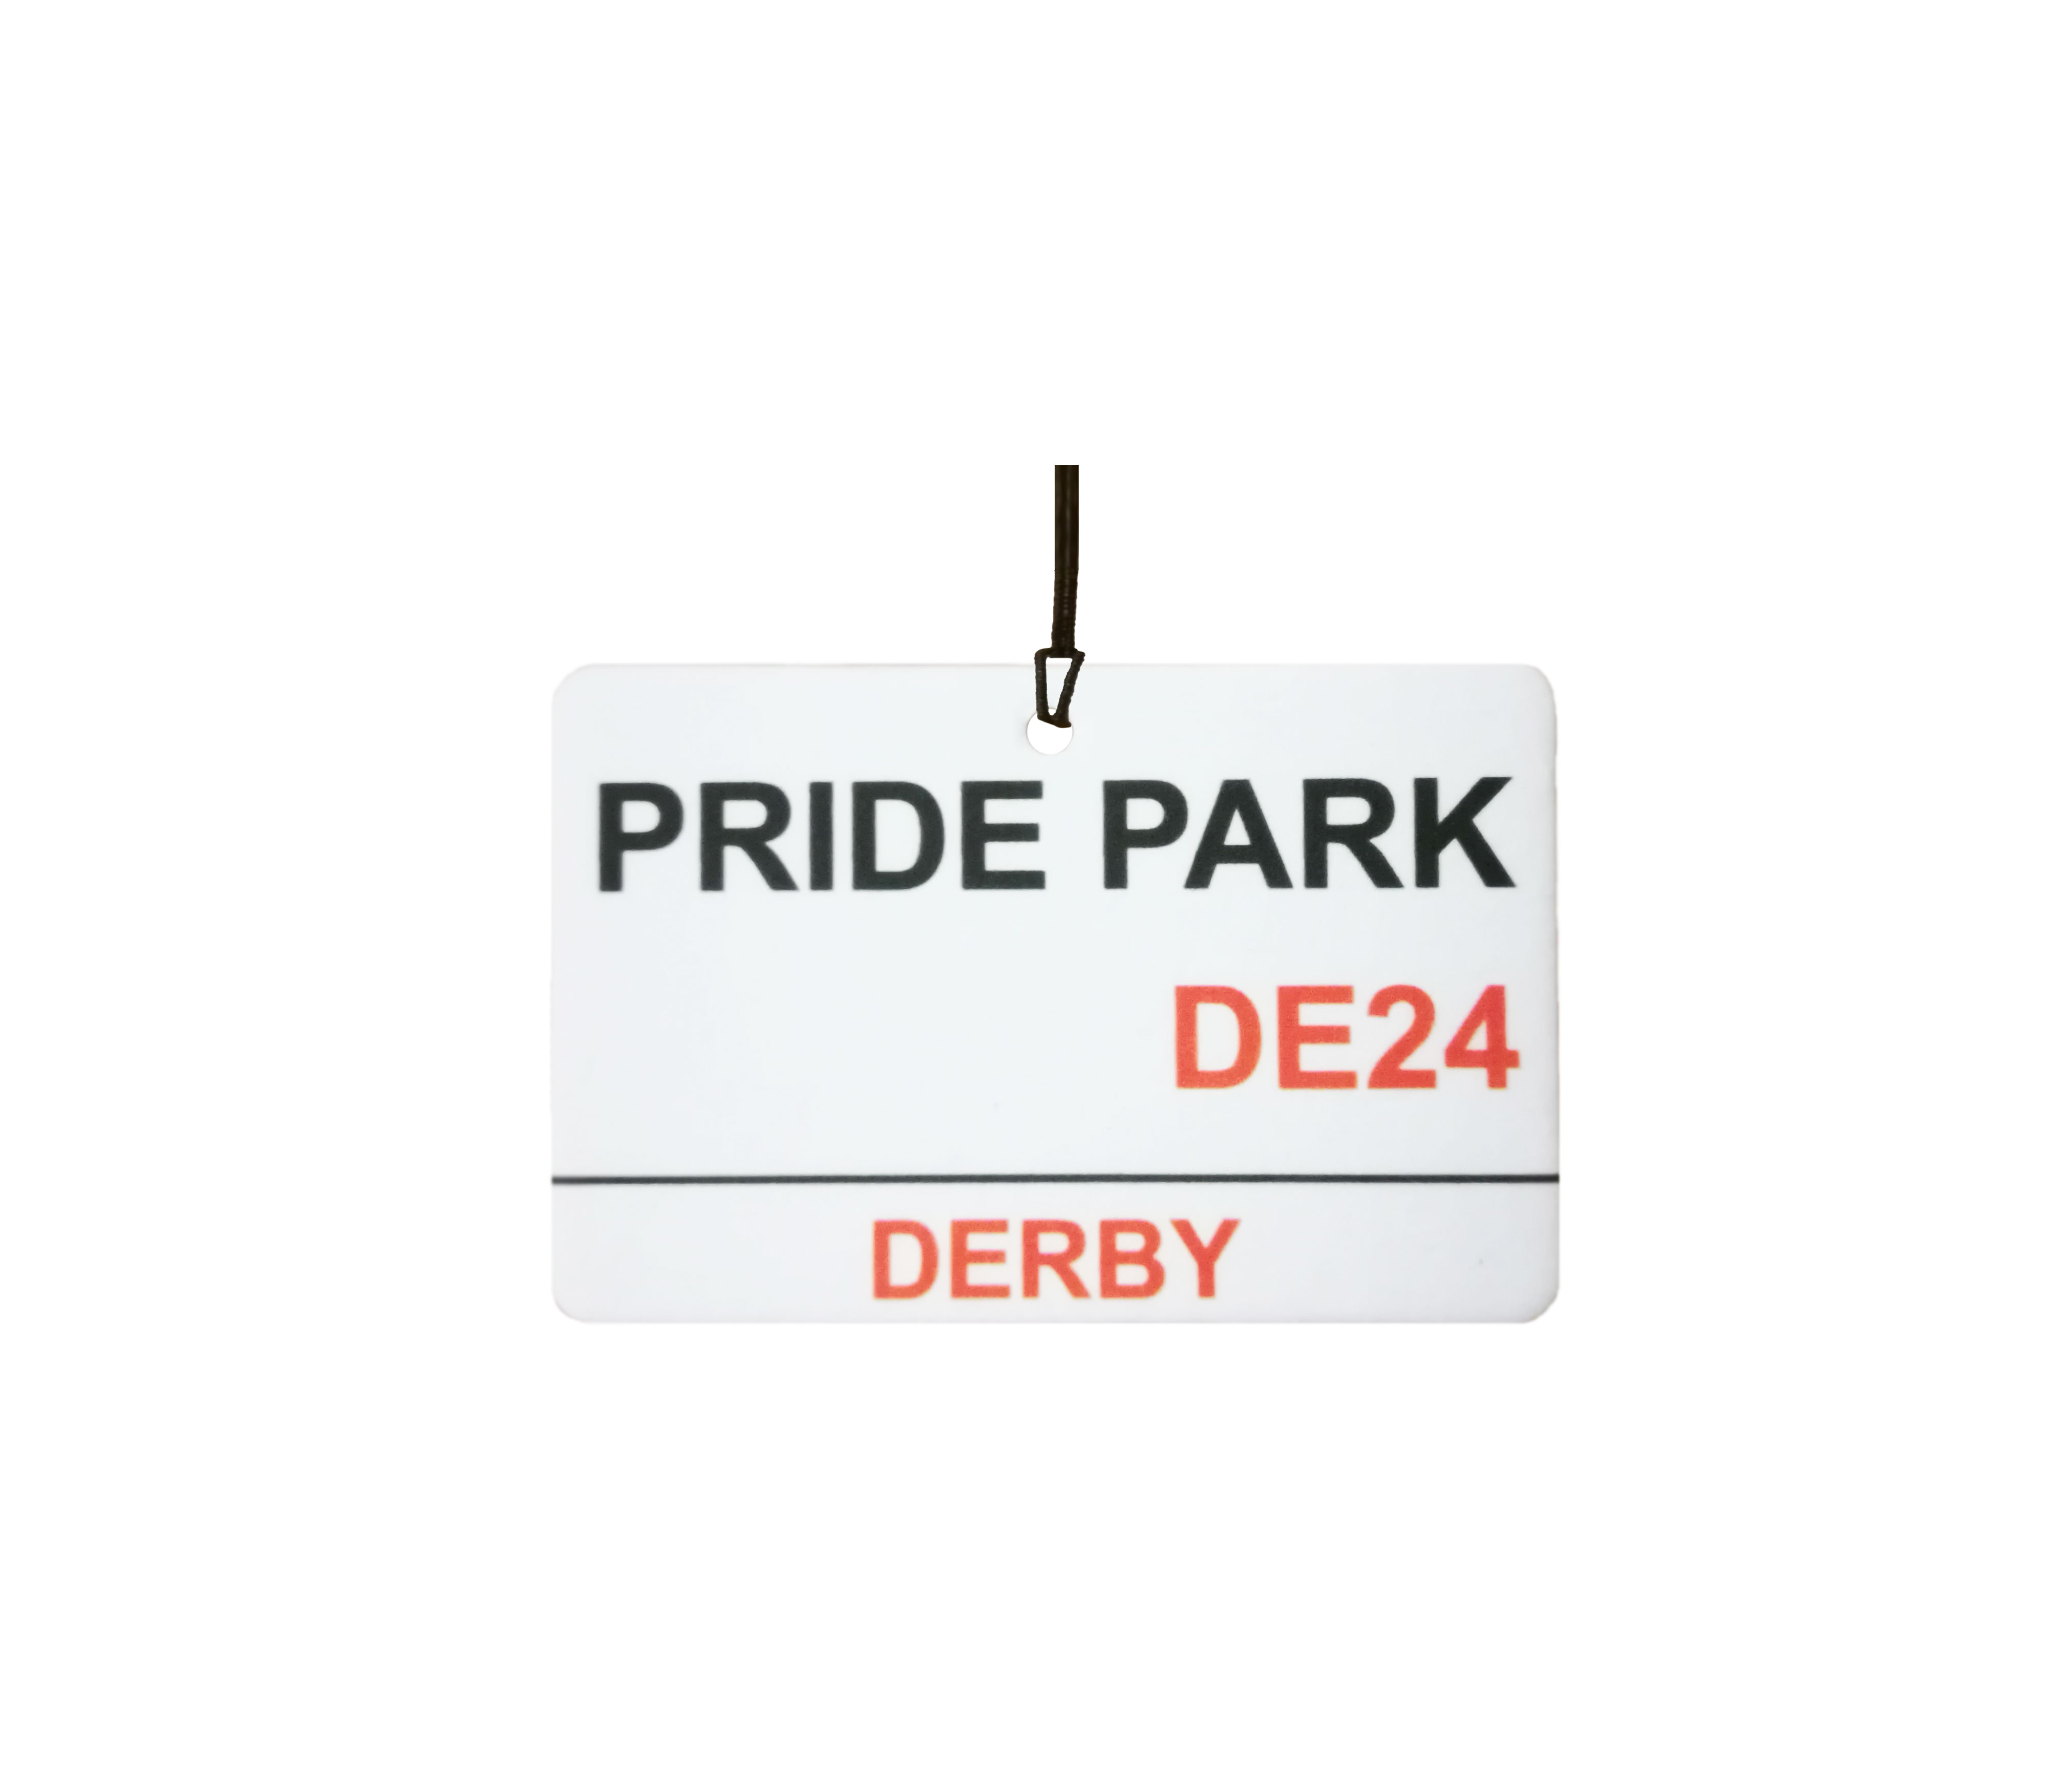 Derby / Pride Park Street Sign